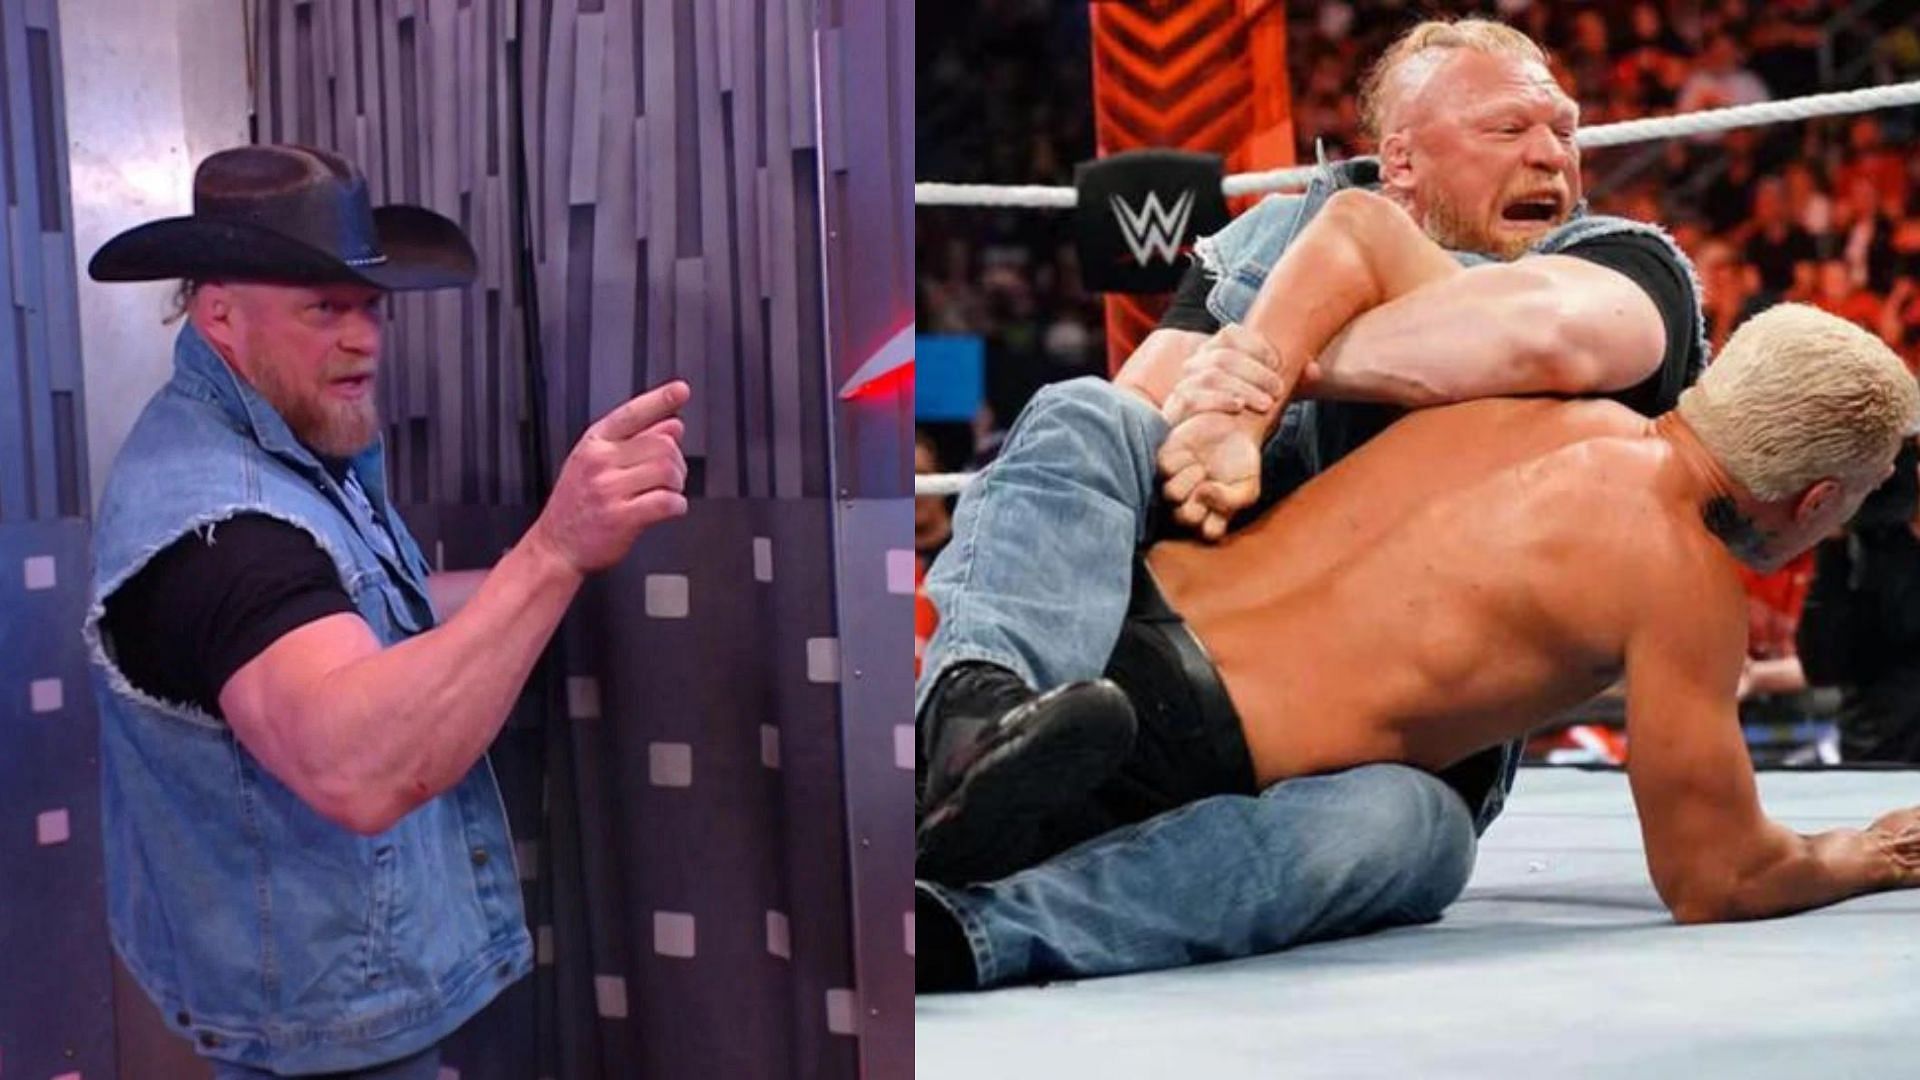 WWE superstar Brock Lesnar attacking Cody Rhodes